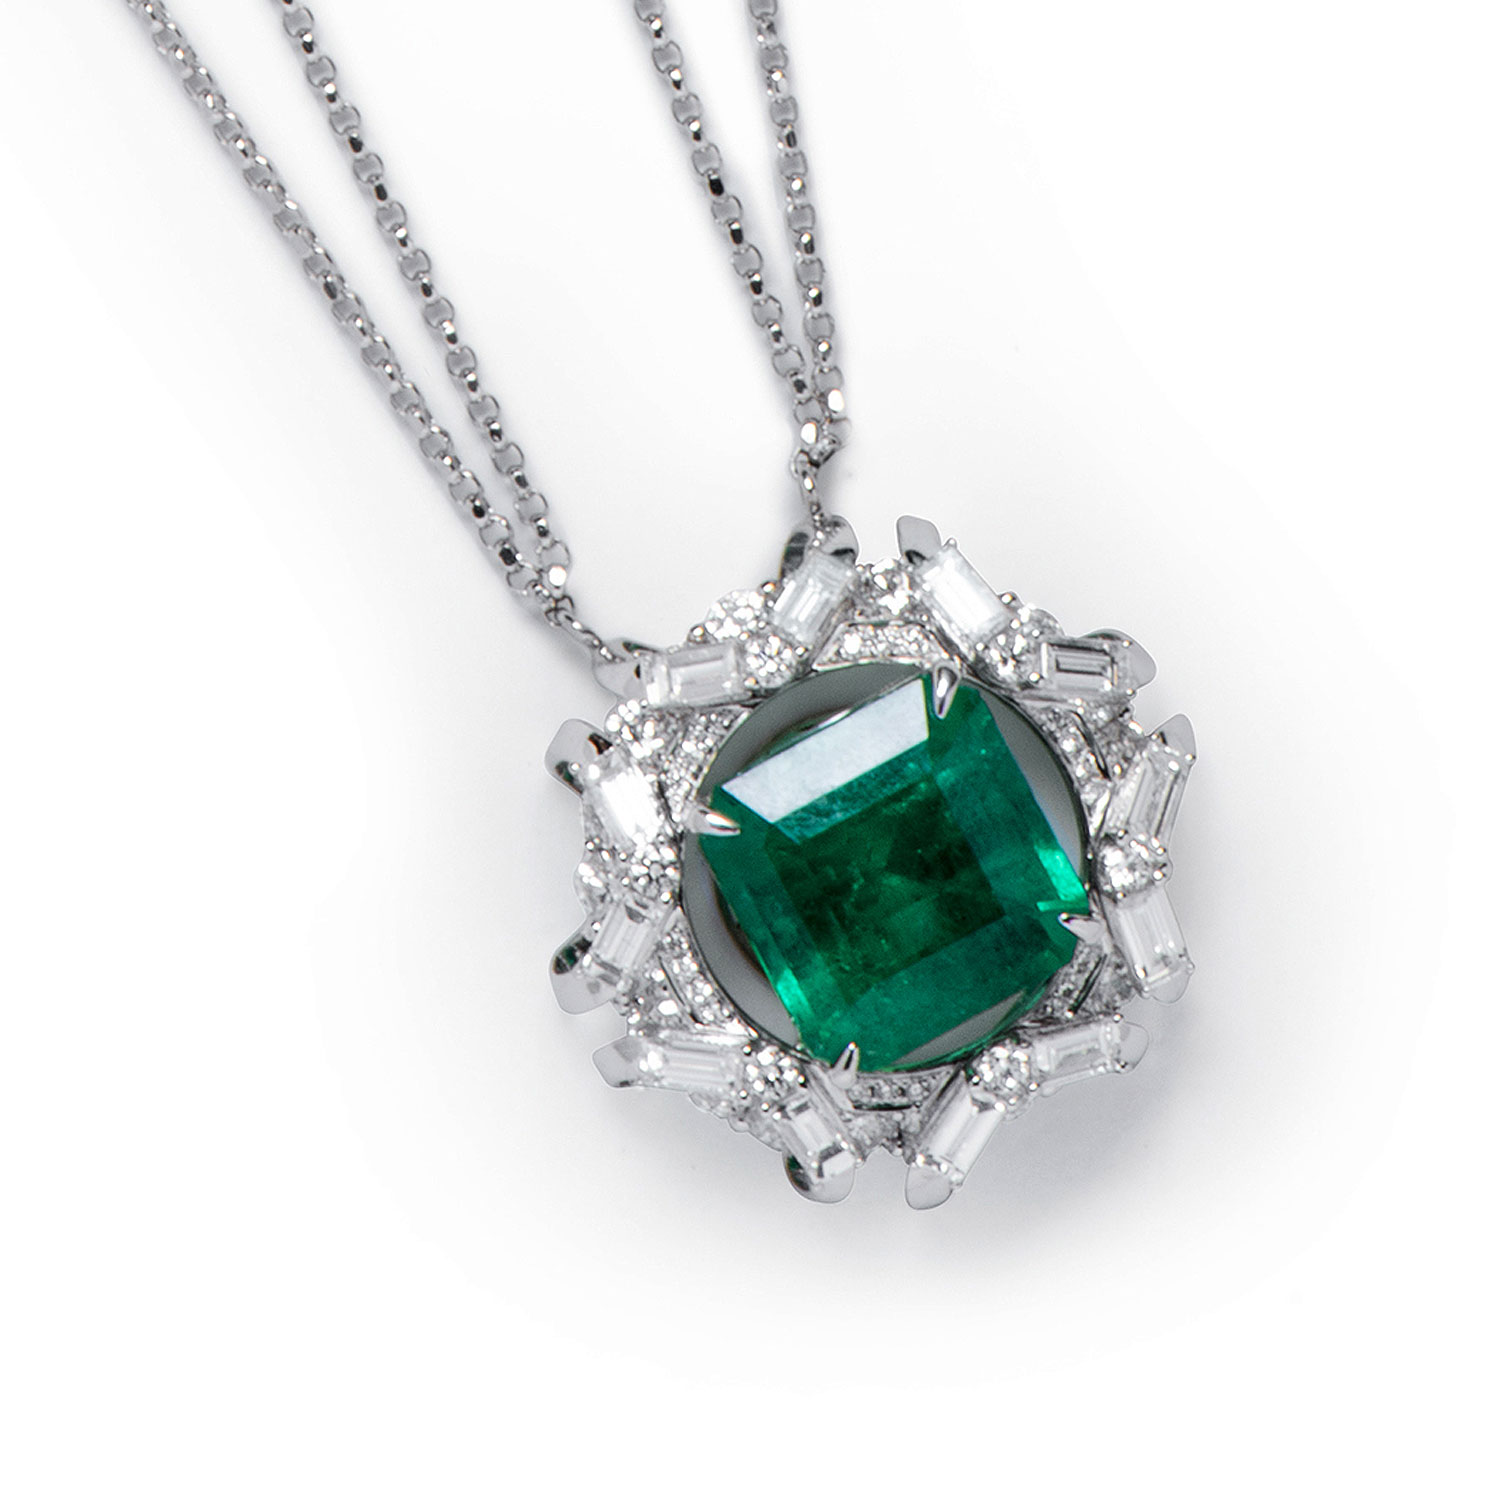 Henri Maillardet - High Priestess Diamond and Emerald Self Necklace